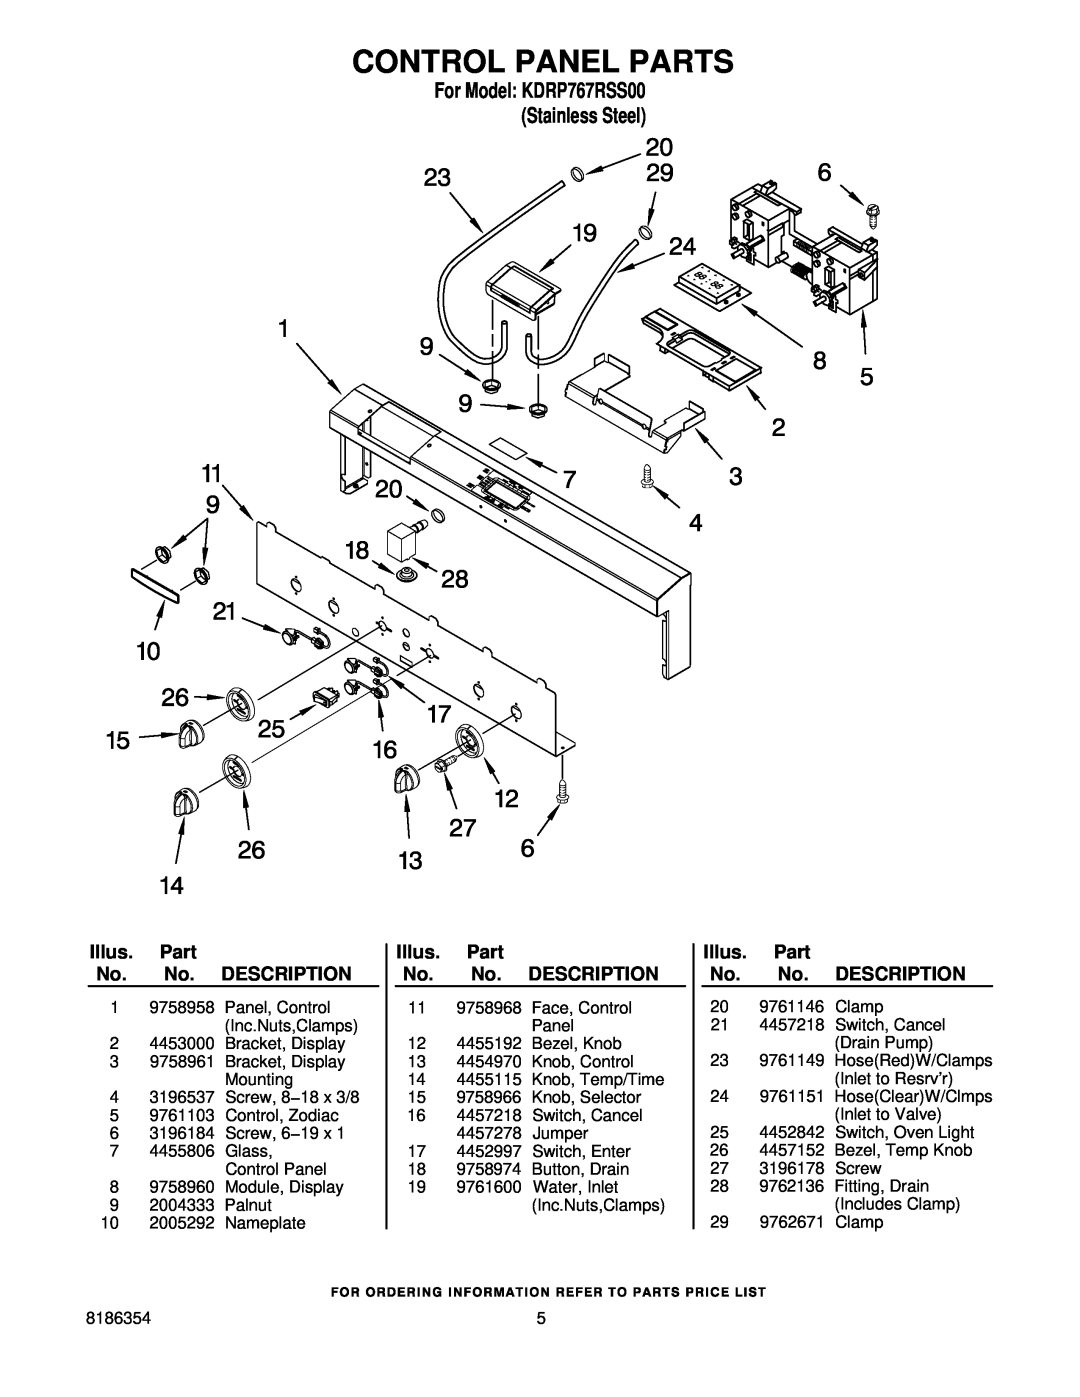 KitchenAid manual Control Panel Parts, For Model KDRP767RSS00 Stainless Steel, Illus. Part No. No. DESCRIPTION 